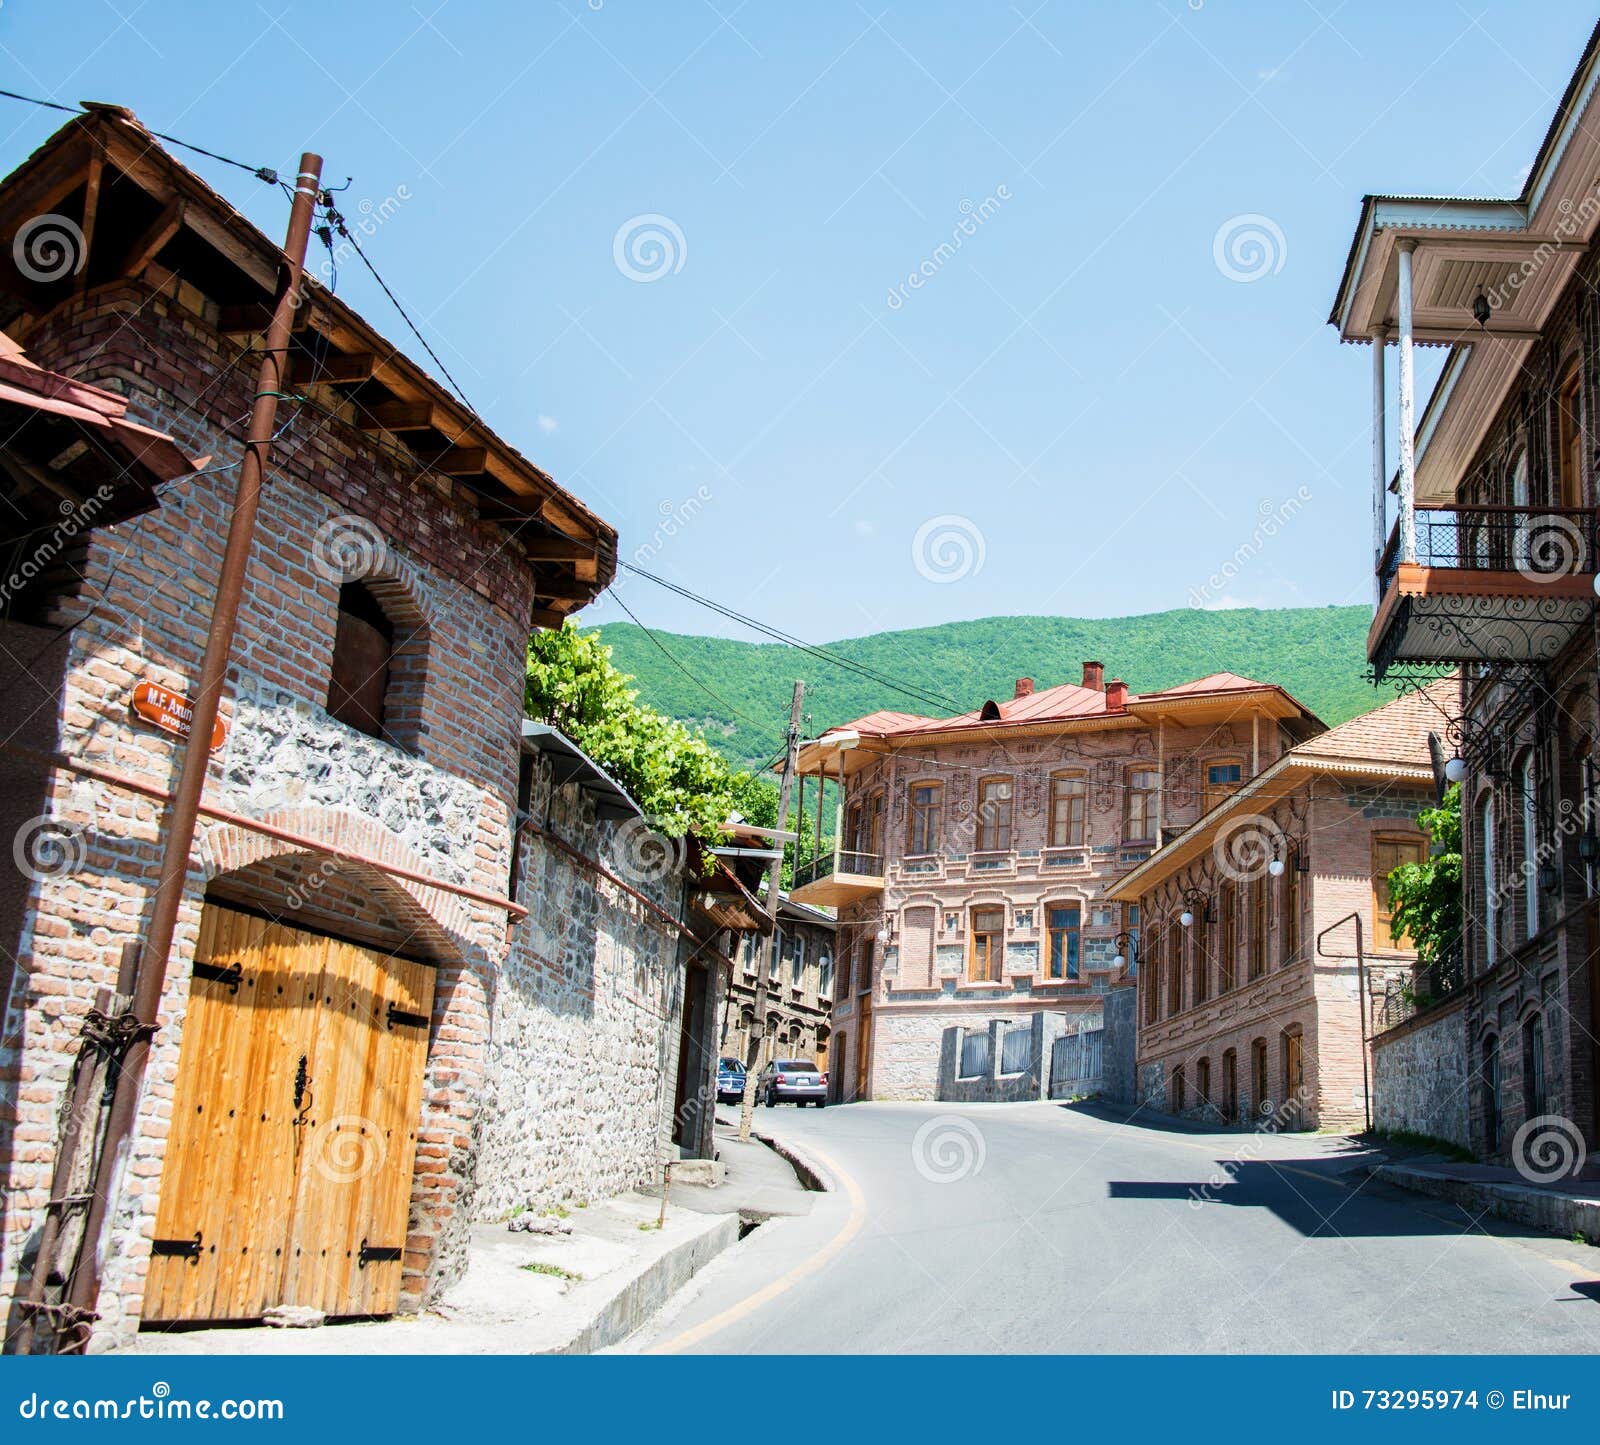 The City Of Sheki  In Azerbaijan  Stock Photo Image of 